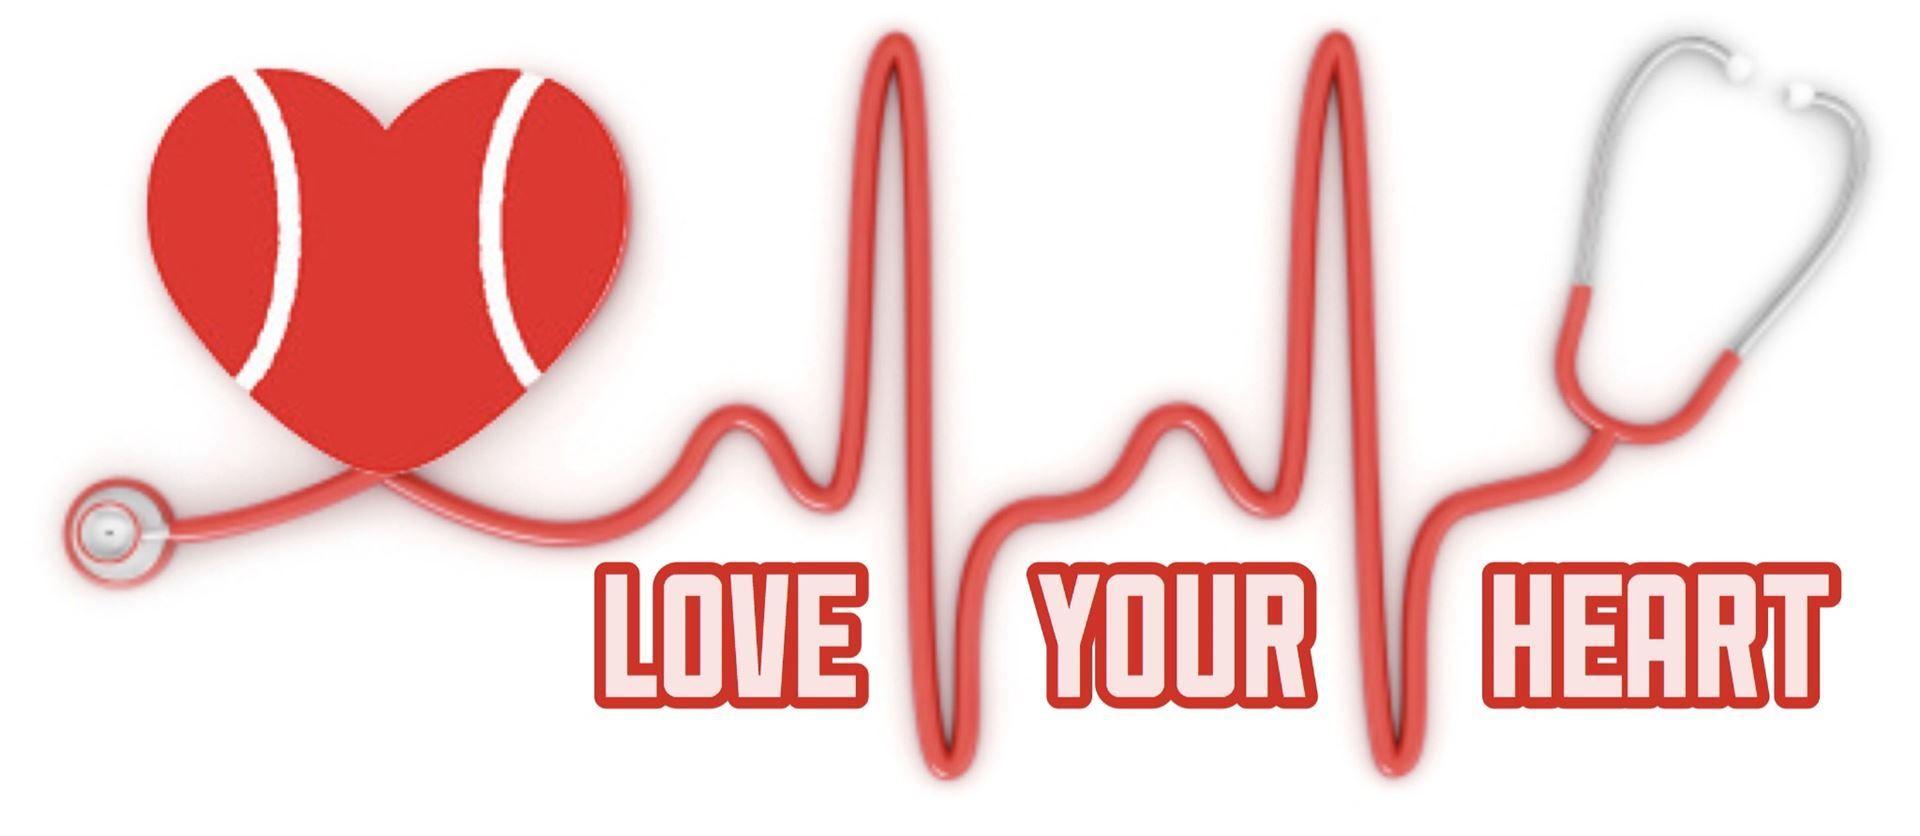 Heart Health and Wellness Logo - Capital Tennis Association - Love Your Heart Health Wellness Event ...